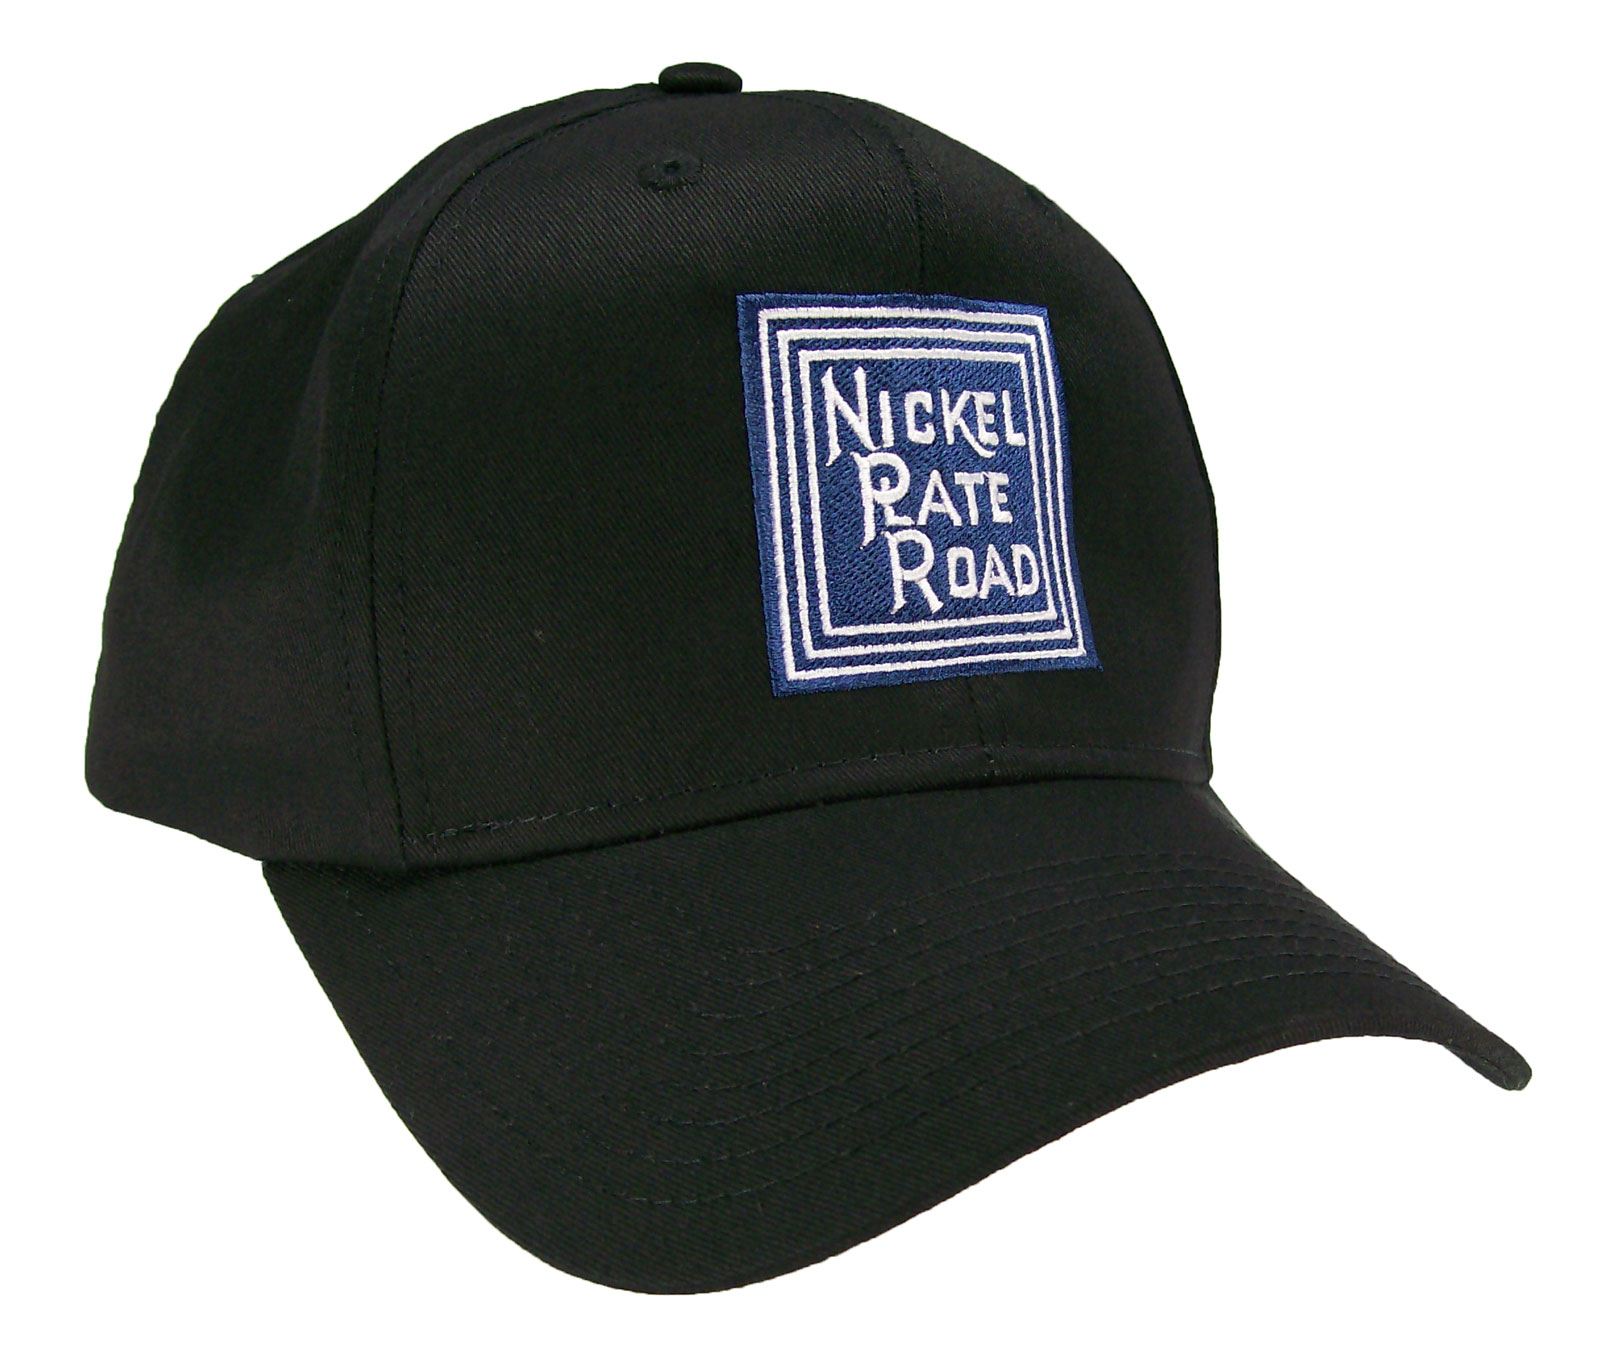 New York Chicago & St. Louis Railroad Nickel Plate Road Cap Hat #40-2600 -  Locomotive Logos